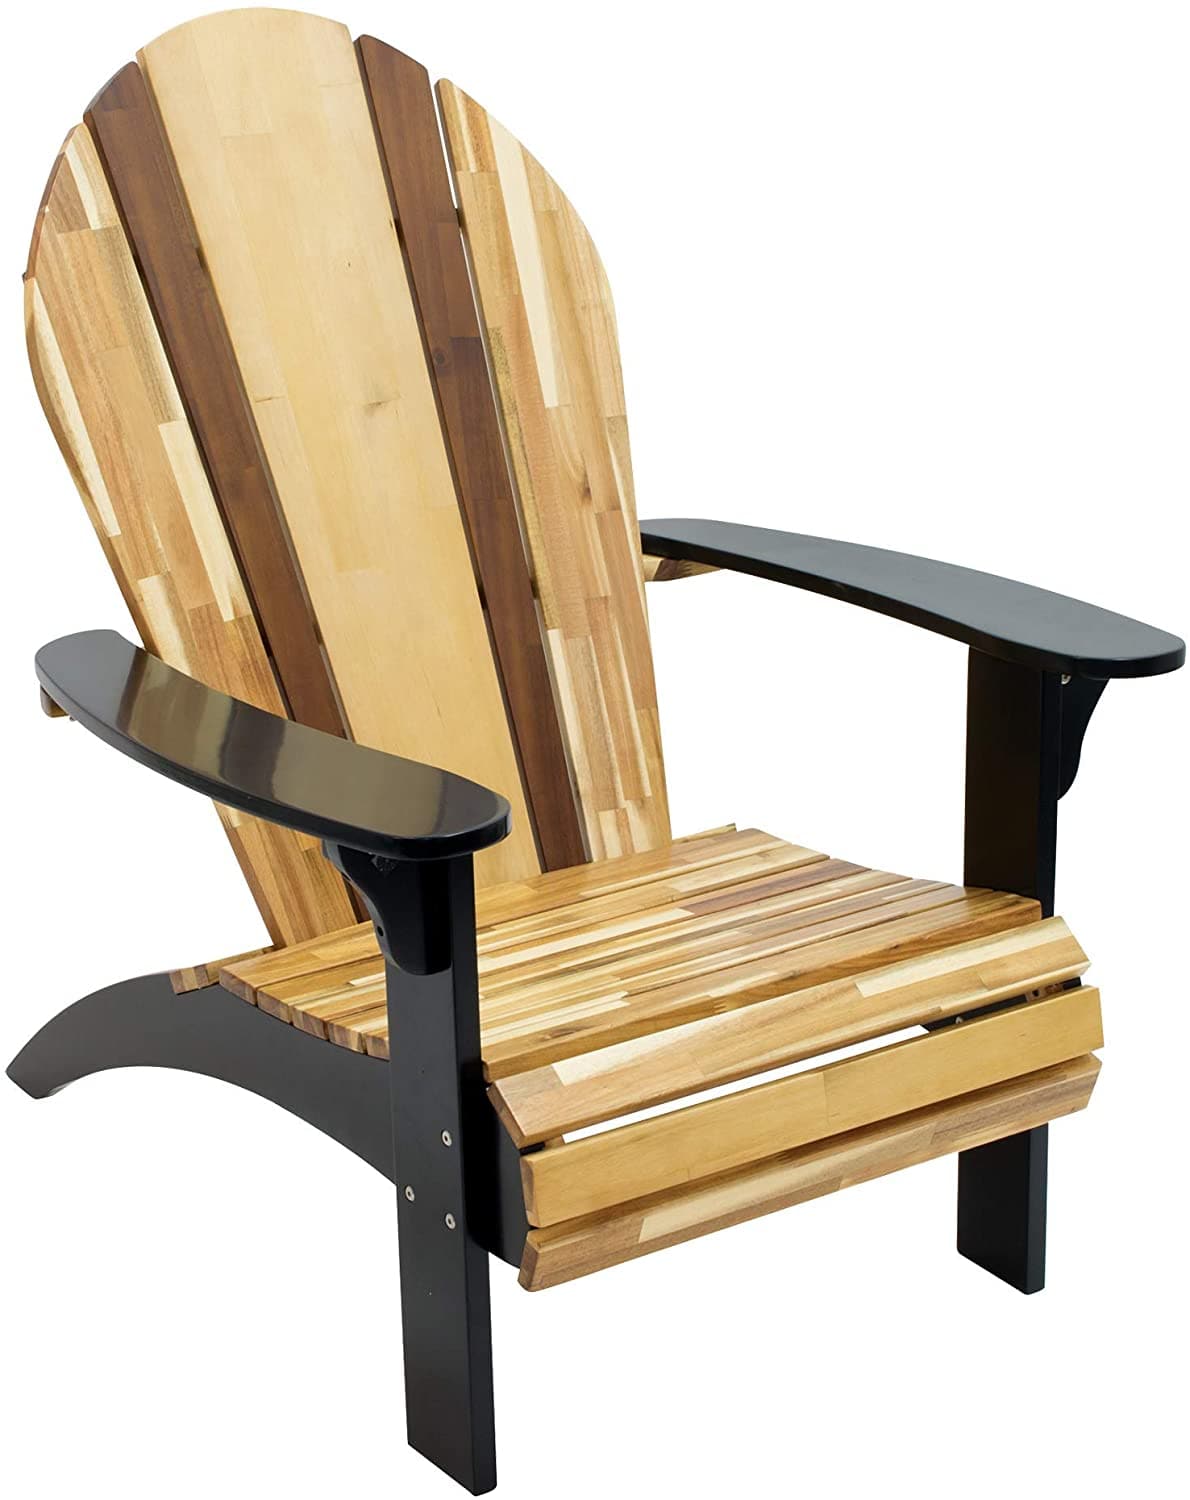 RIO Innovations Classic Woody Surf Adirondack Outdoor Wood Chair - Senior.com Adirondack Chairs